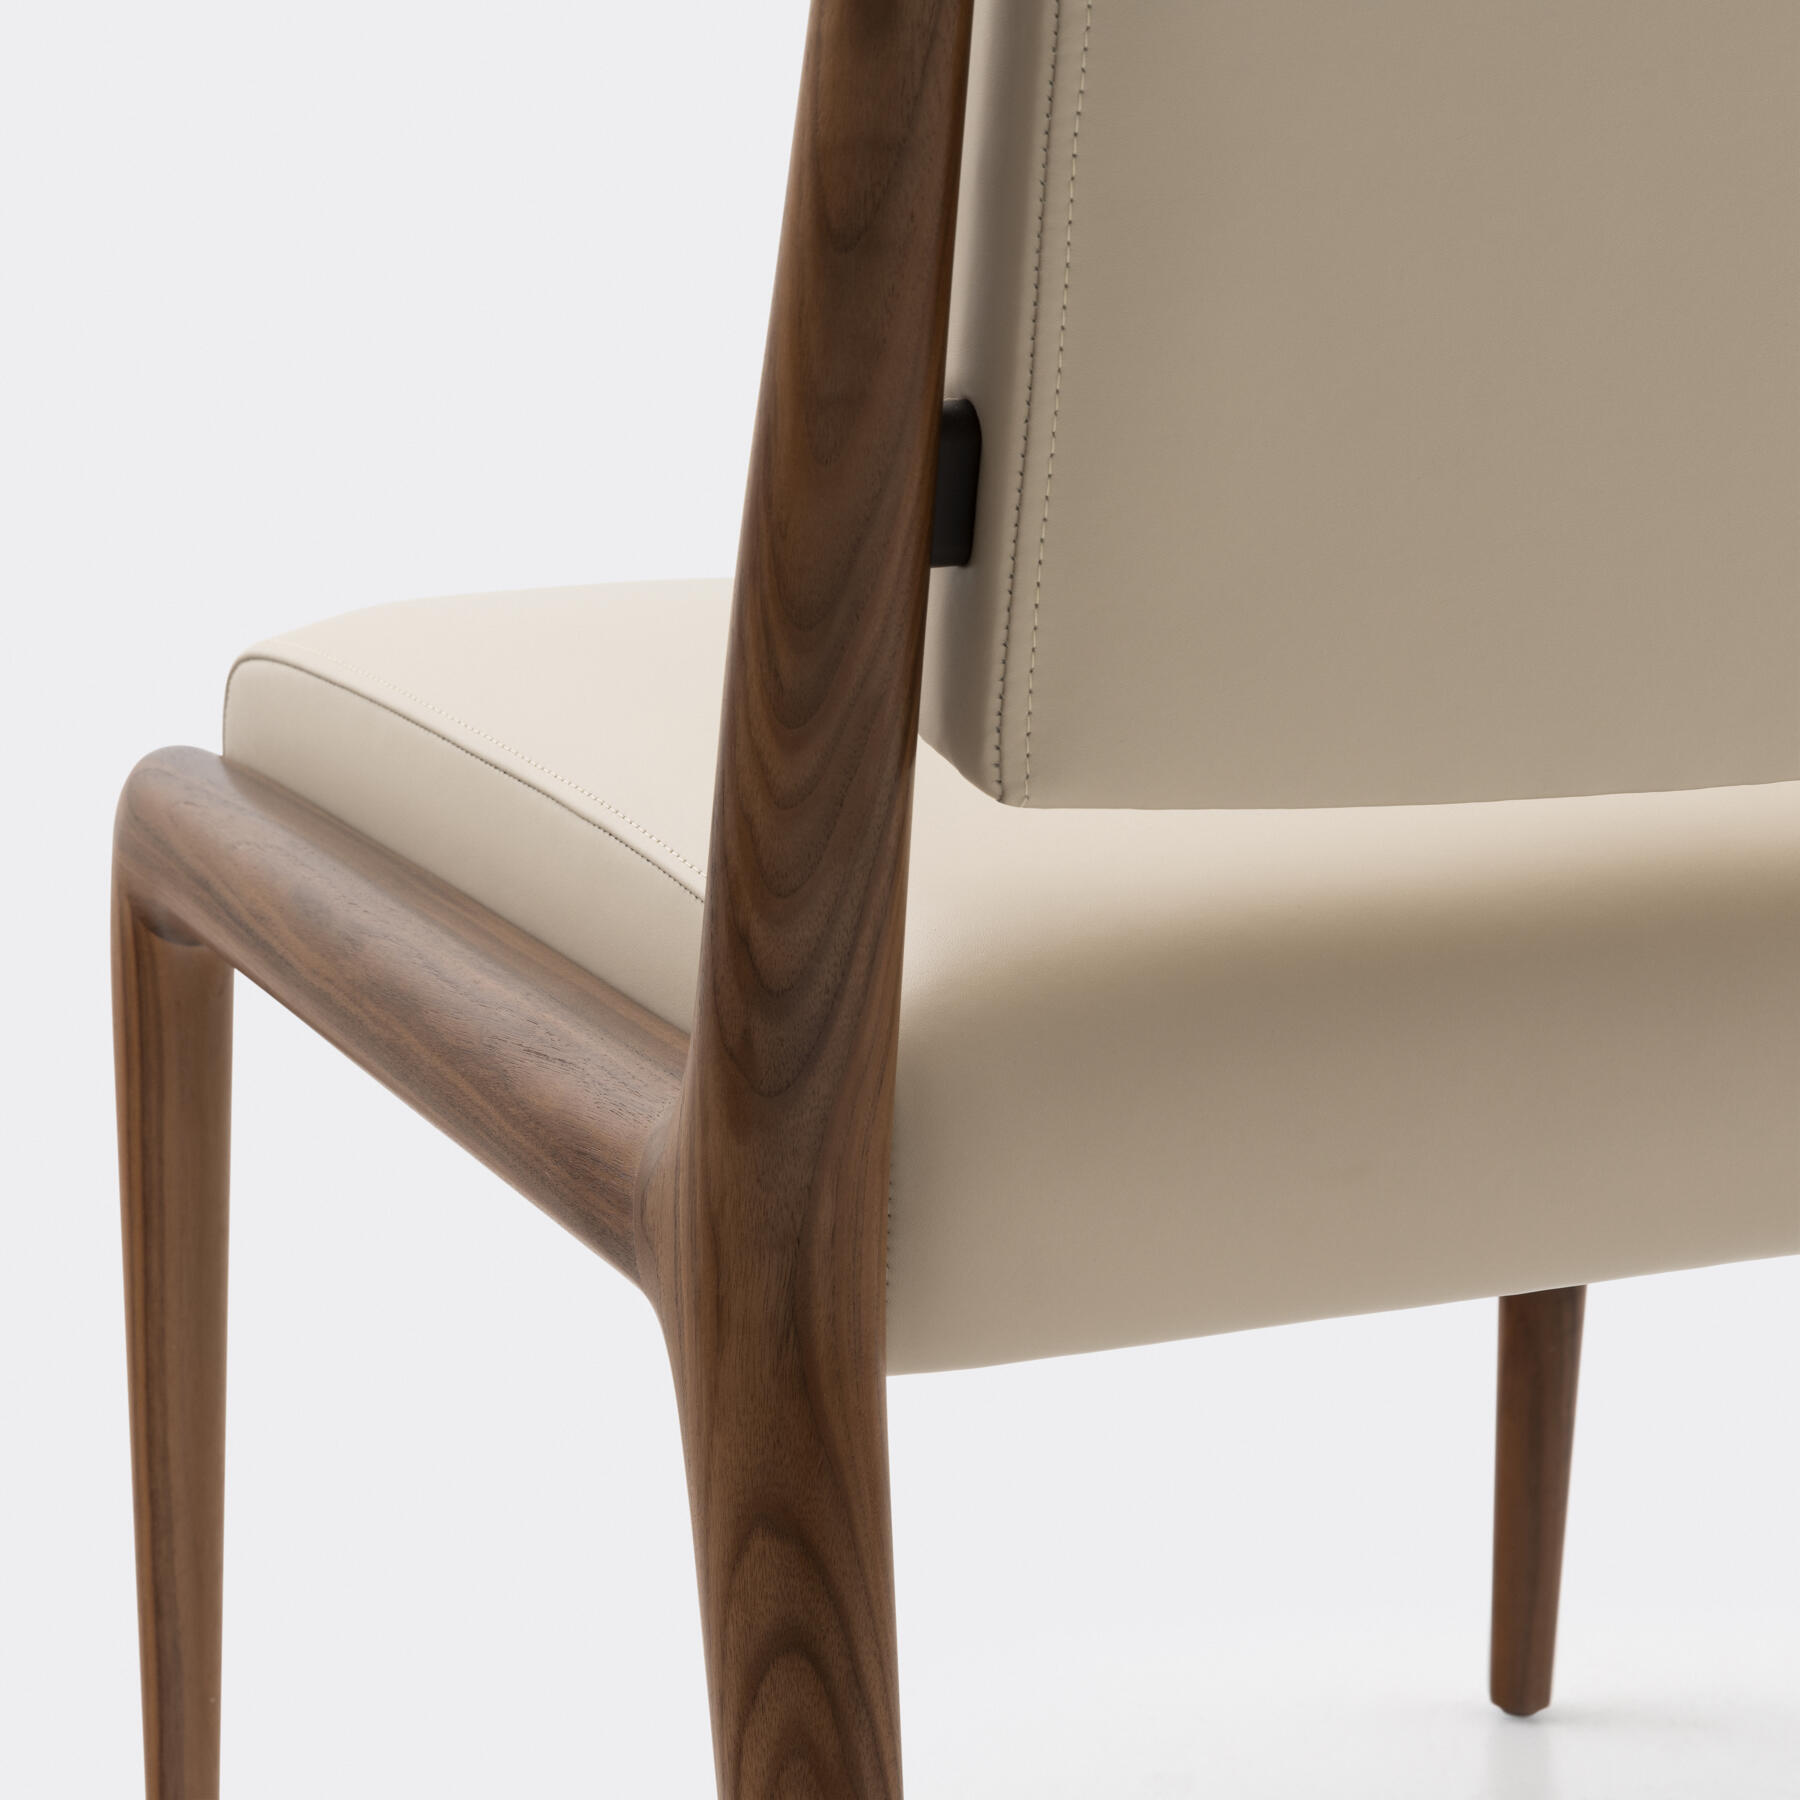 Cote Dining Side Chair, Walnut Natural Medium, Medium Bronze, Milano Bisque